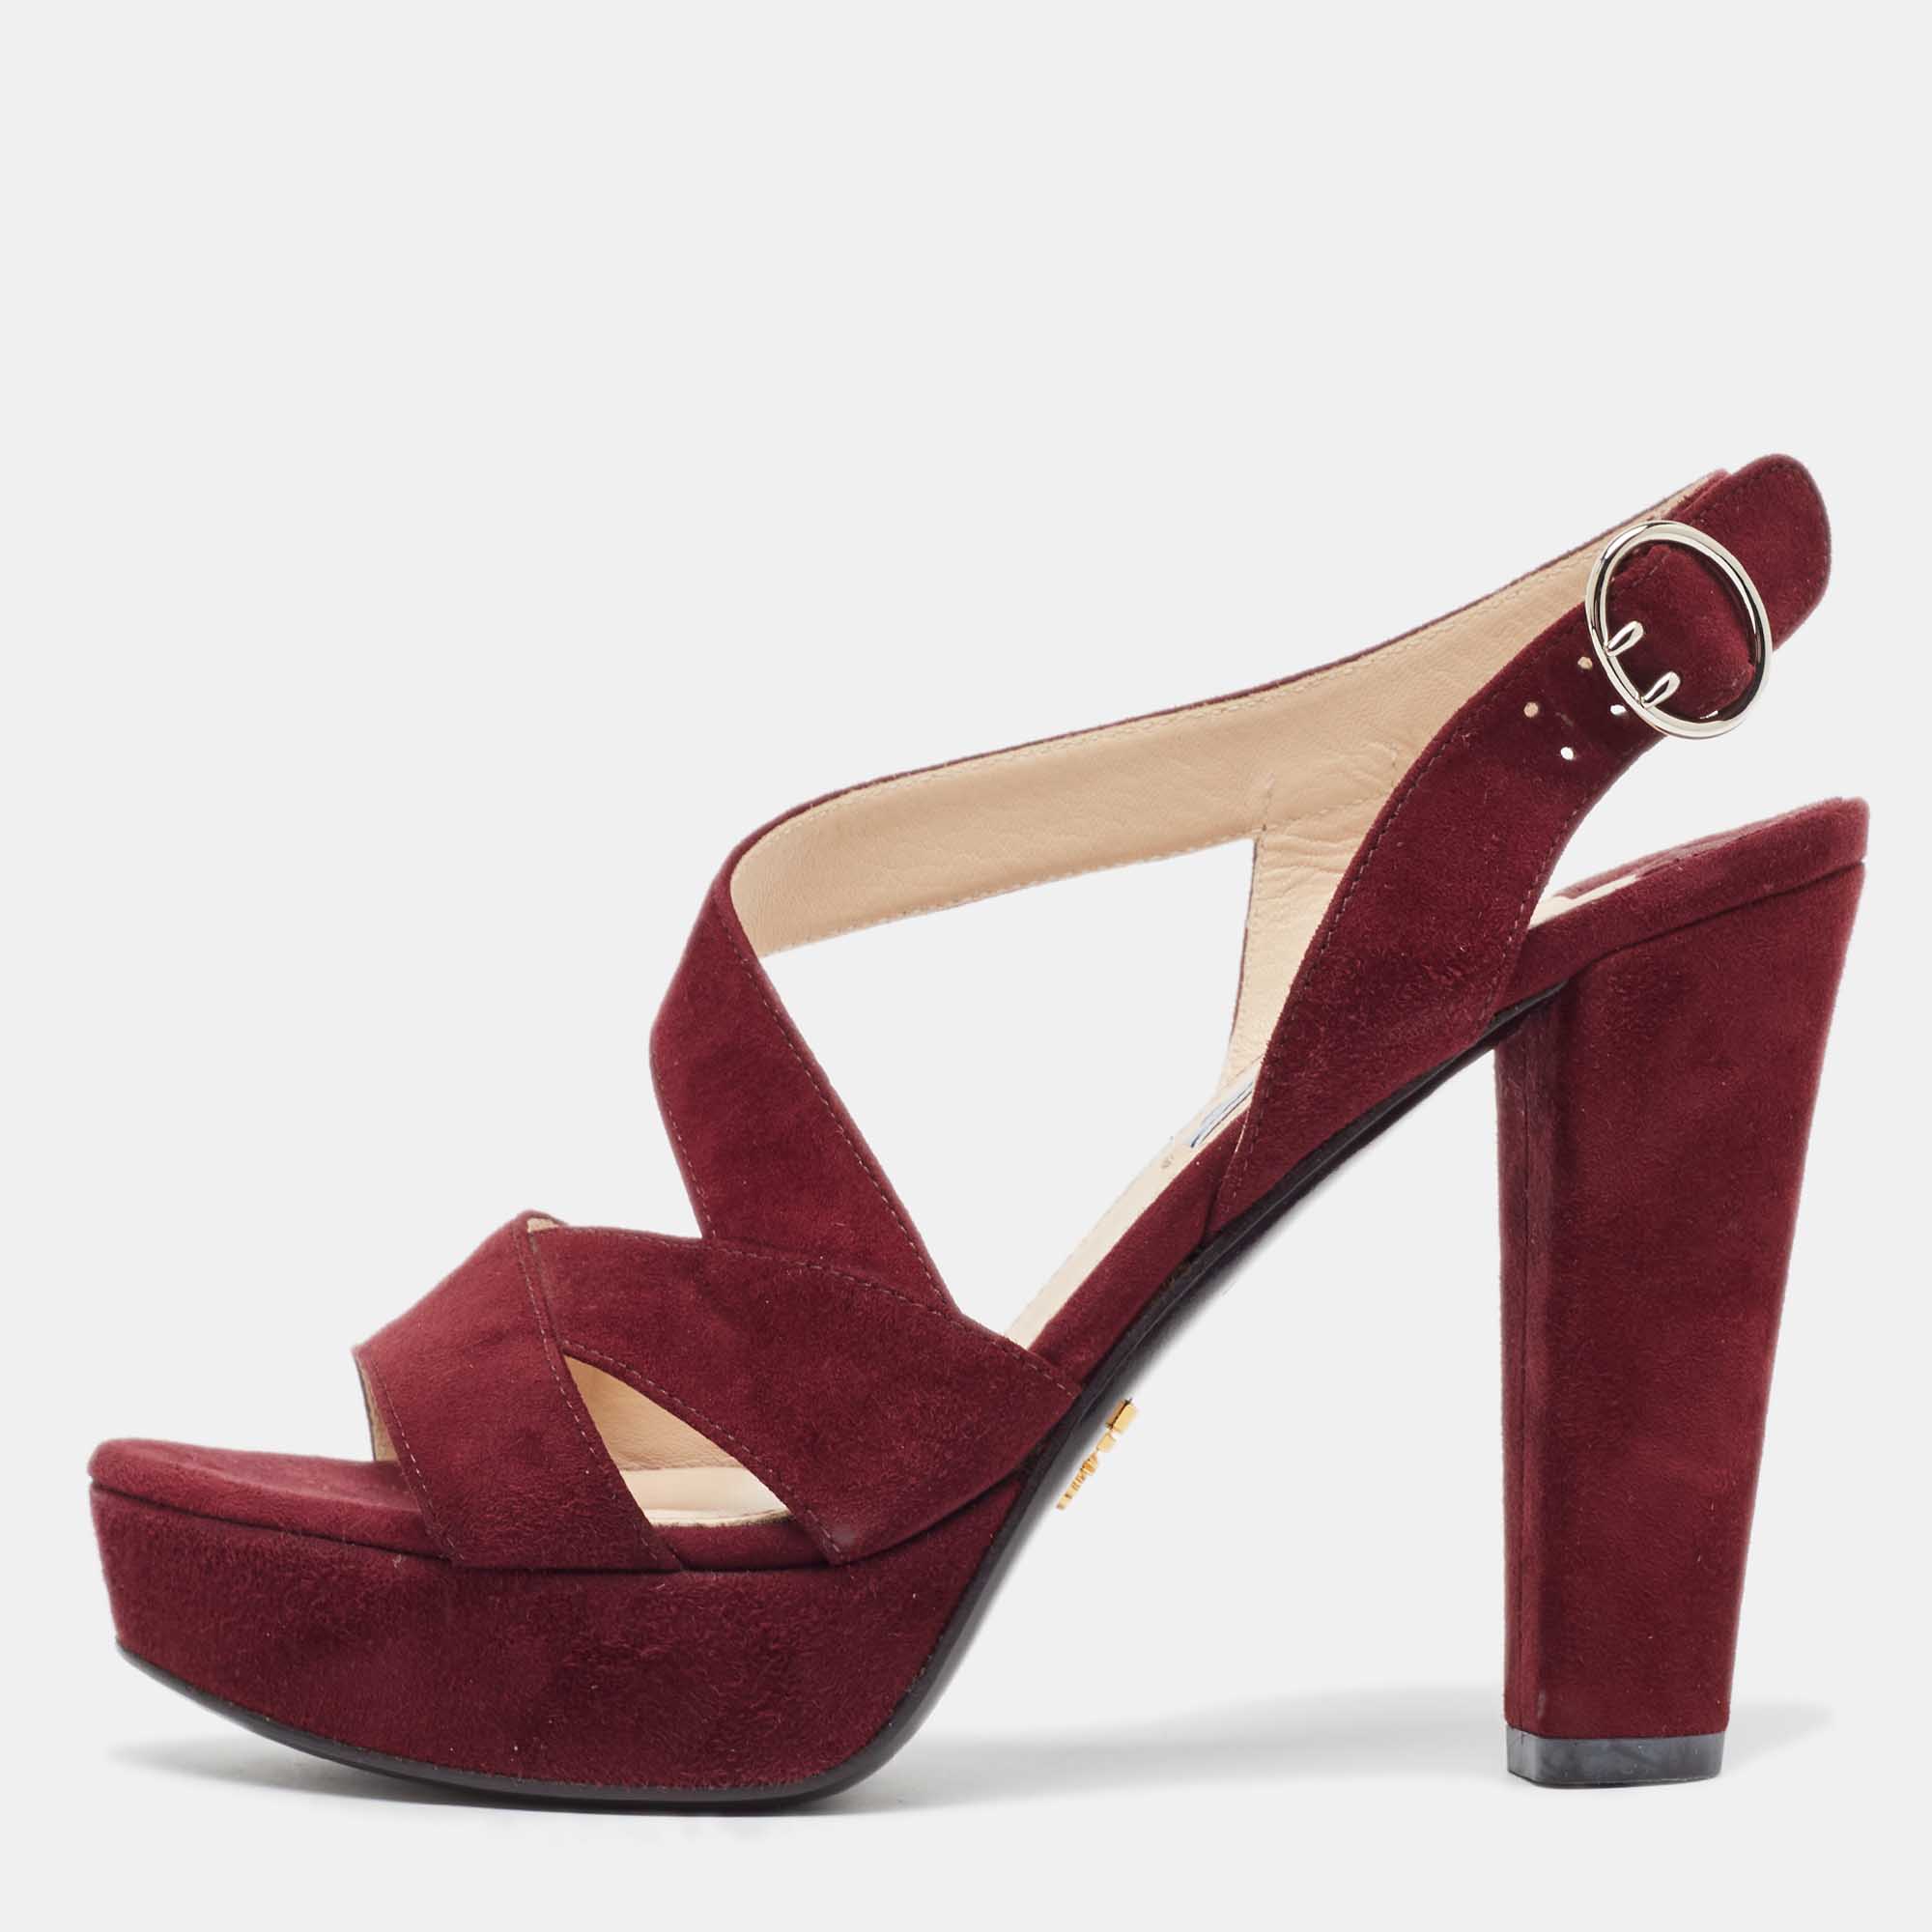 Prada burgundy suede platform slingback sandals size 36.5